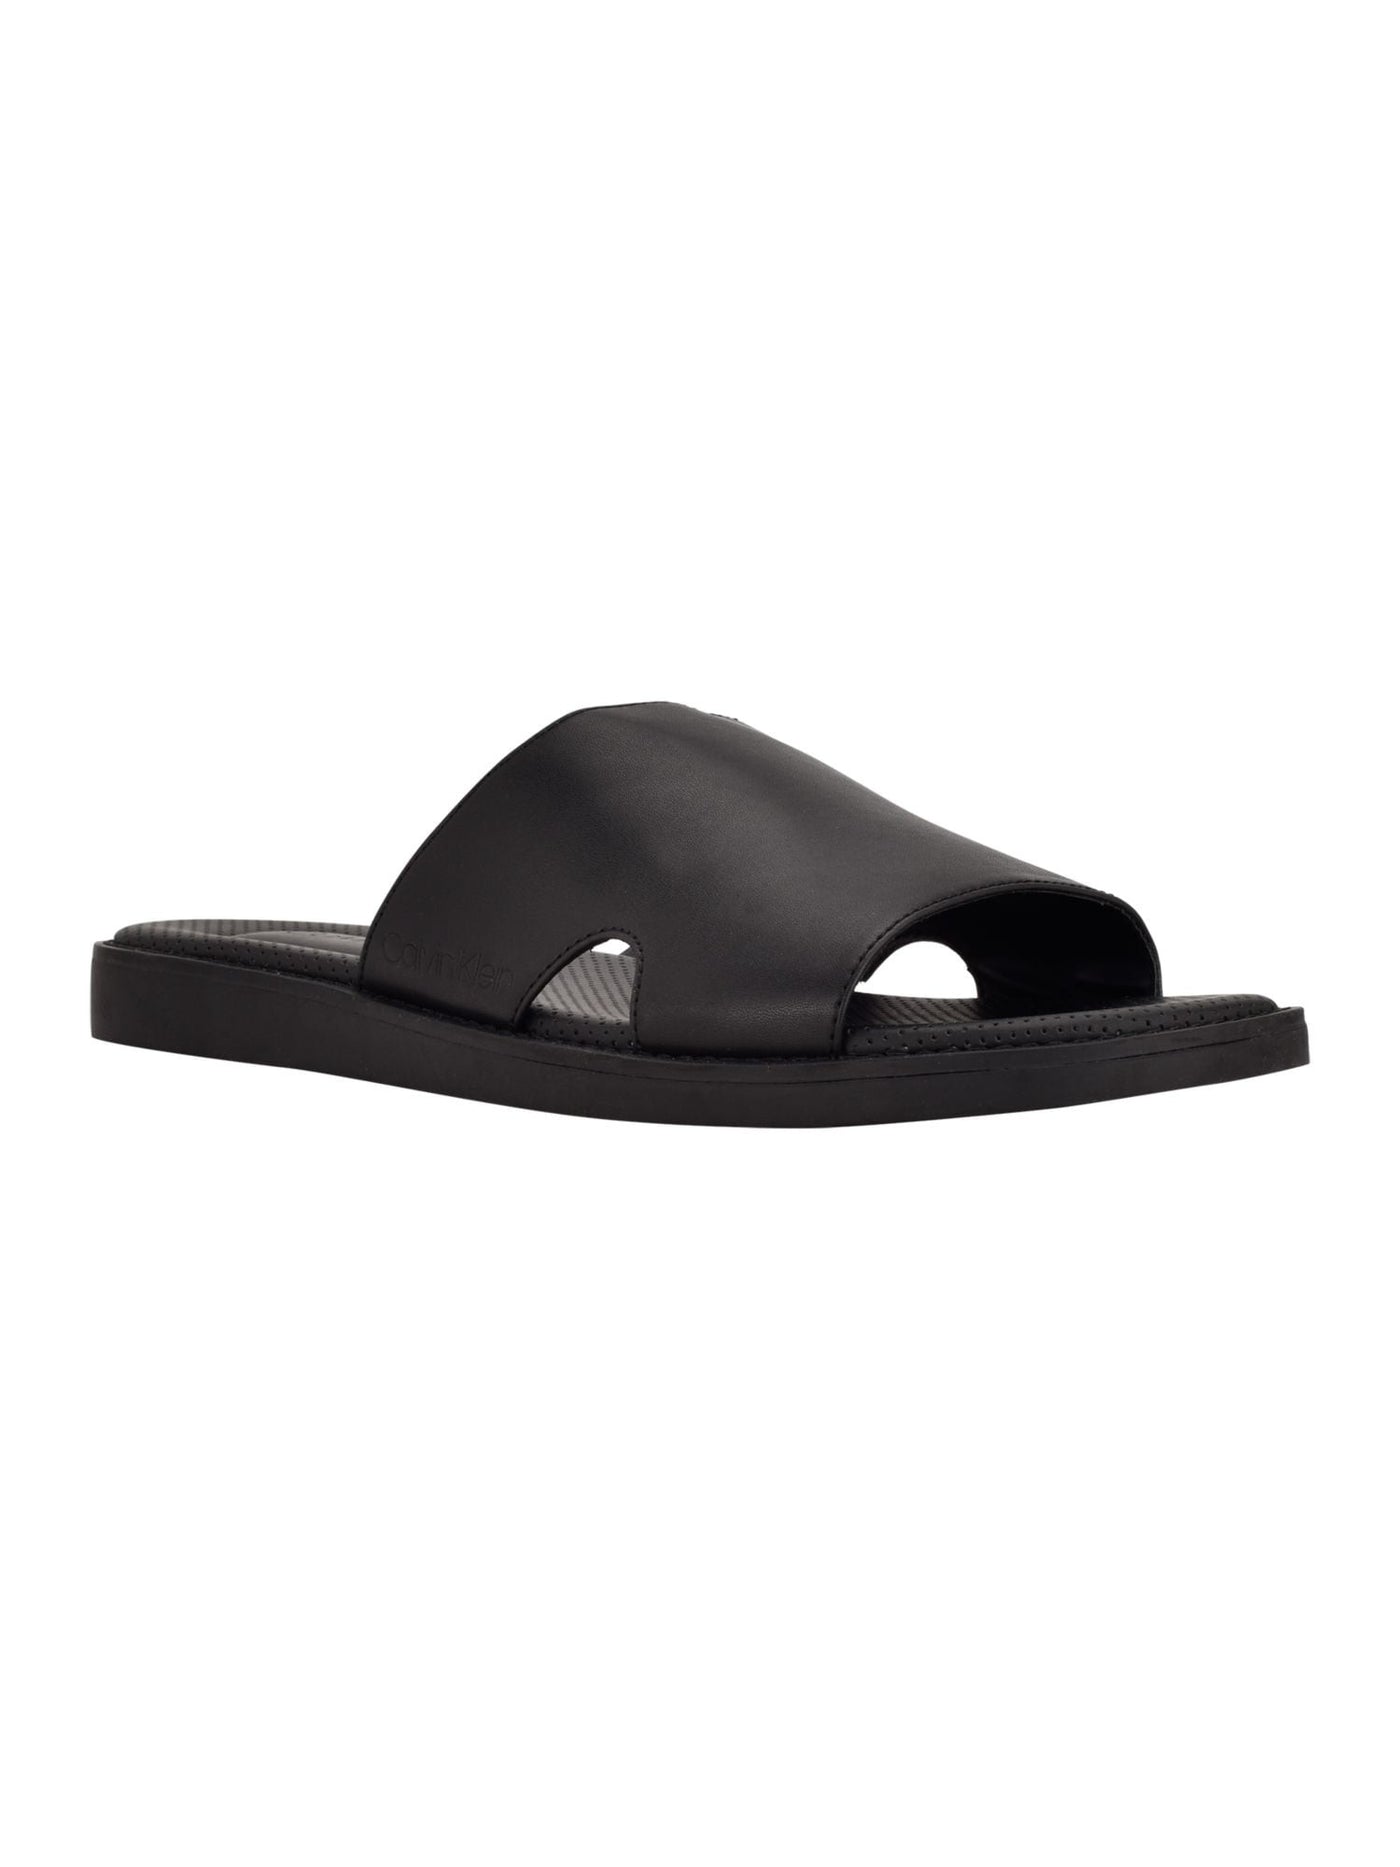 CALVIN KLEIN Mens Black Padded Goring Ethan Round Toe Wedge Slip On Slide Sandals Shoes 12 M